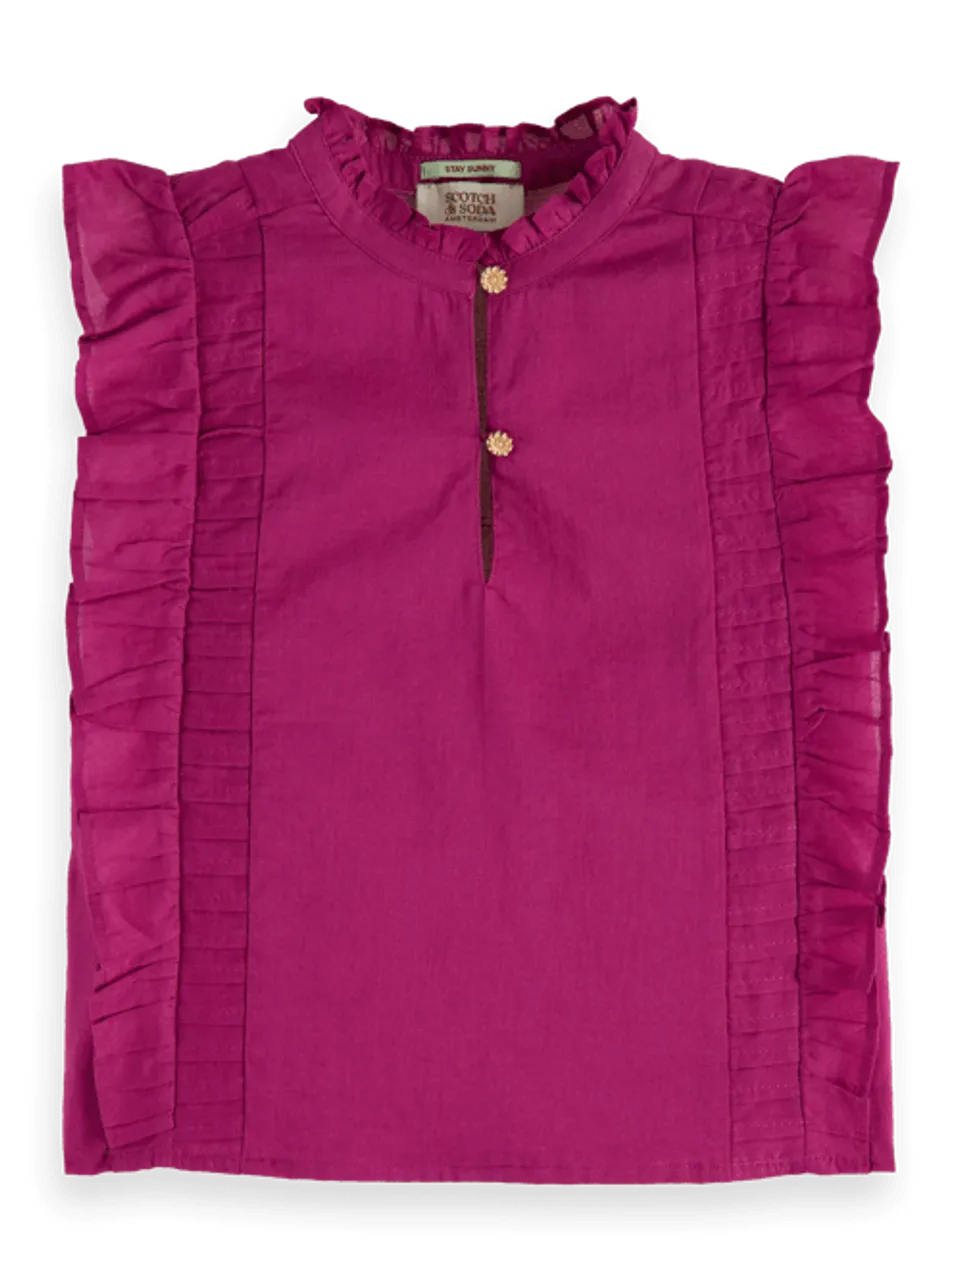 Sleeveless lightweight cotton top - Maat 8 - Multicolor - Meisje - Shirt - Scotch & Soda